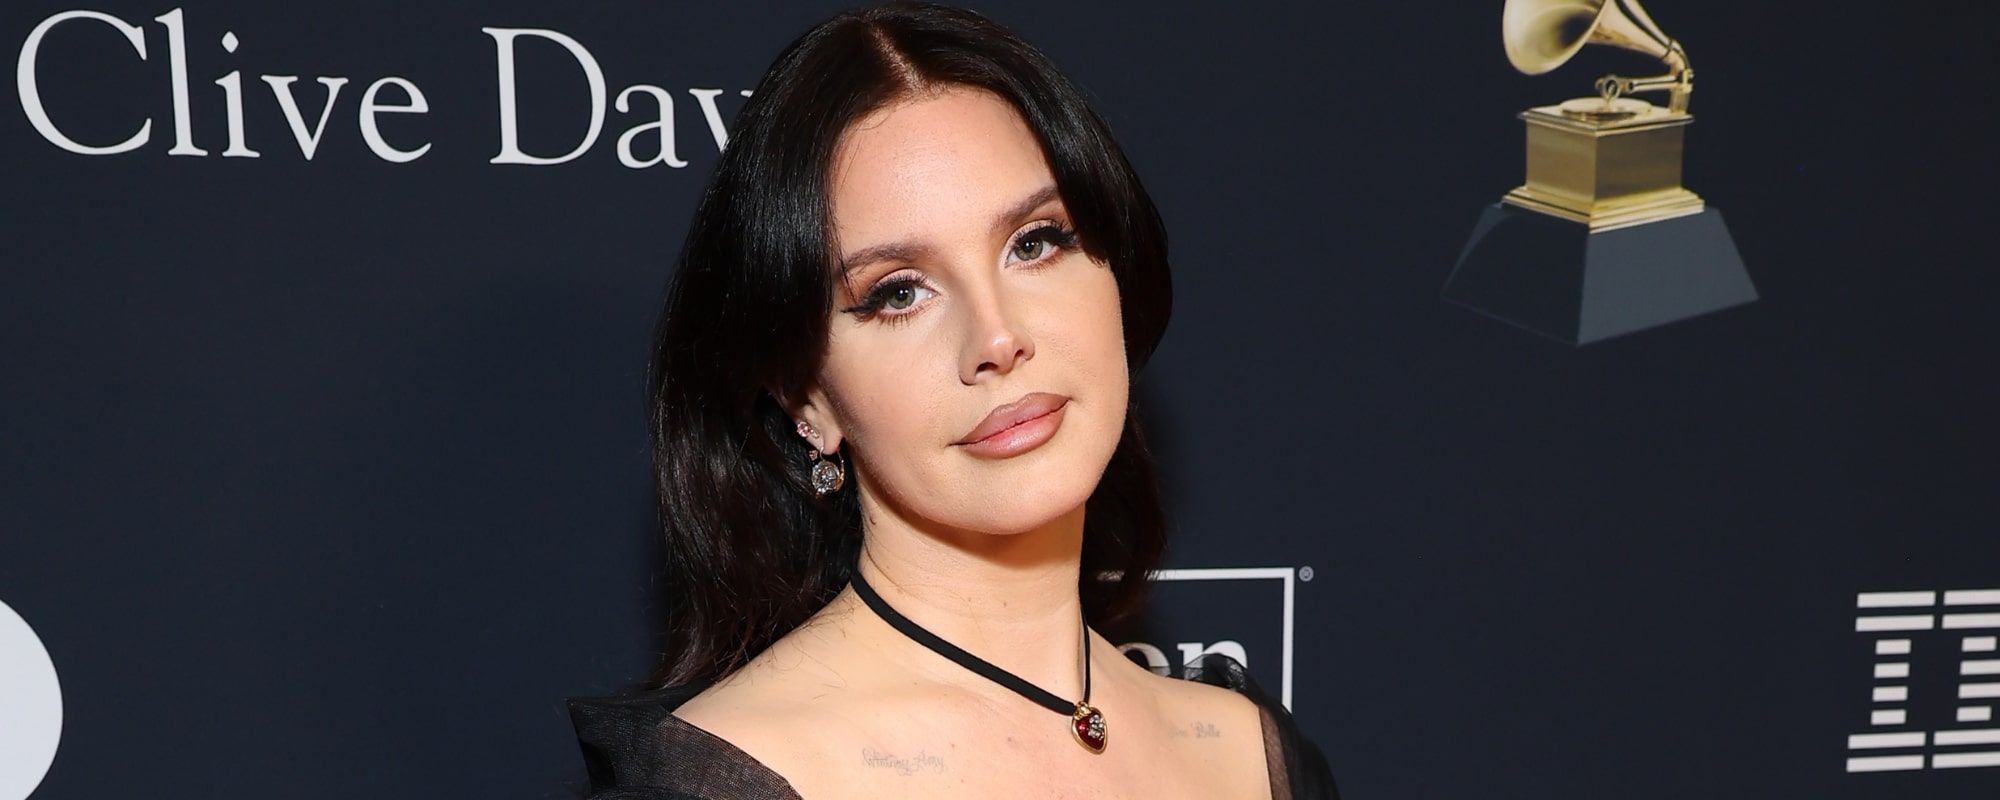 Lana Del Rey Calls Out “Butt Hurt” Former Tour Manager, Says She Battled Laryngitis Ahead of Headlining Coachella Set